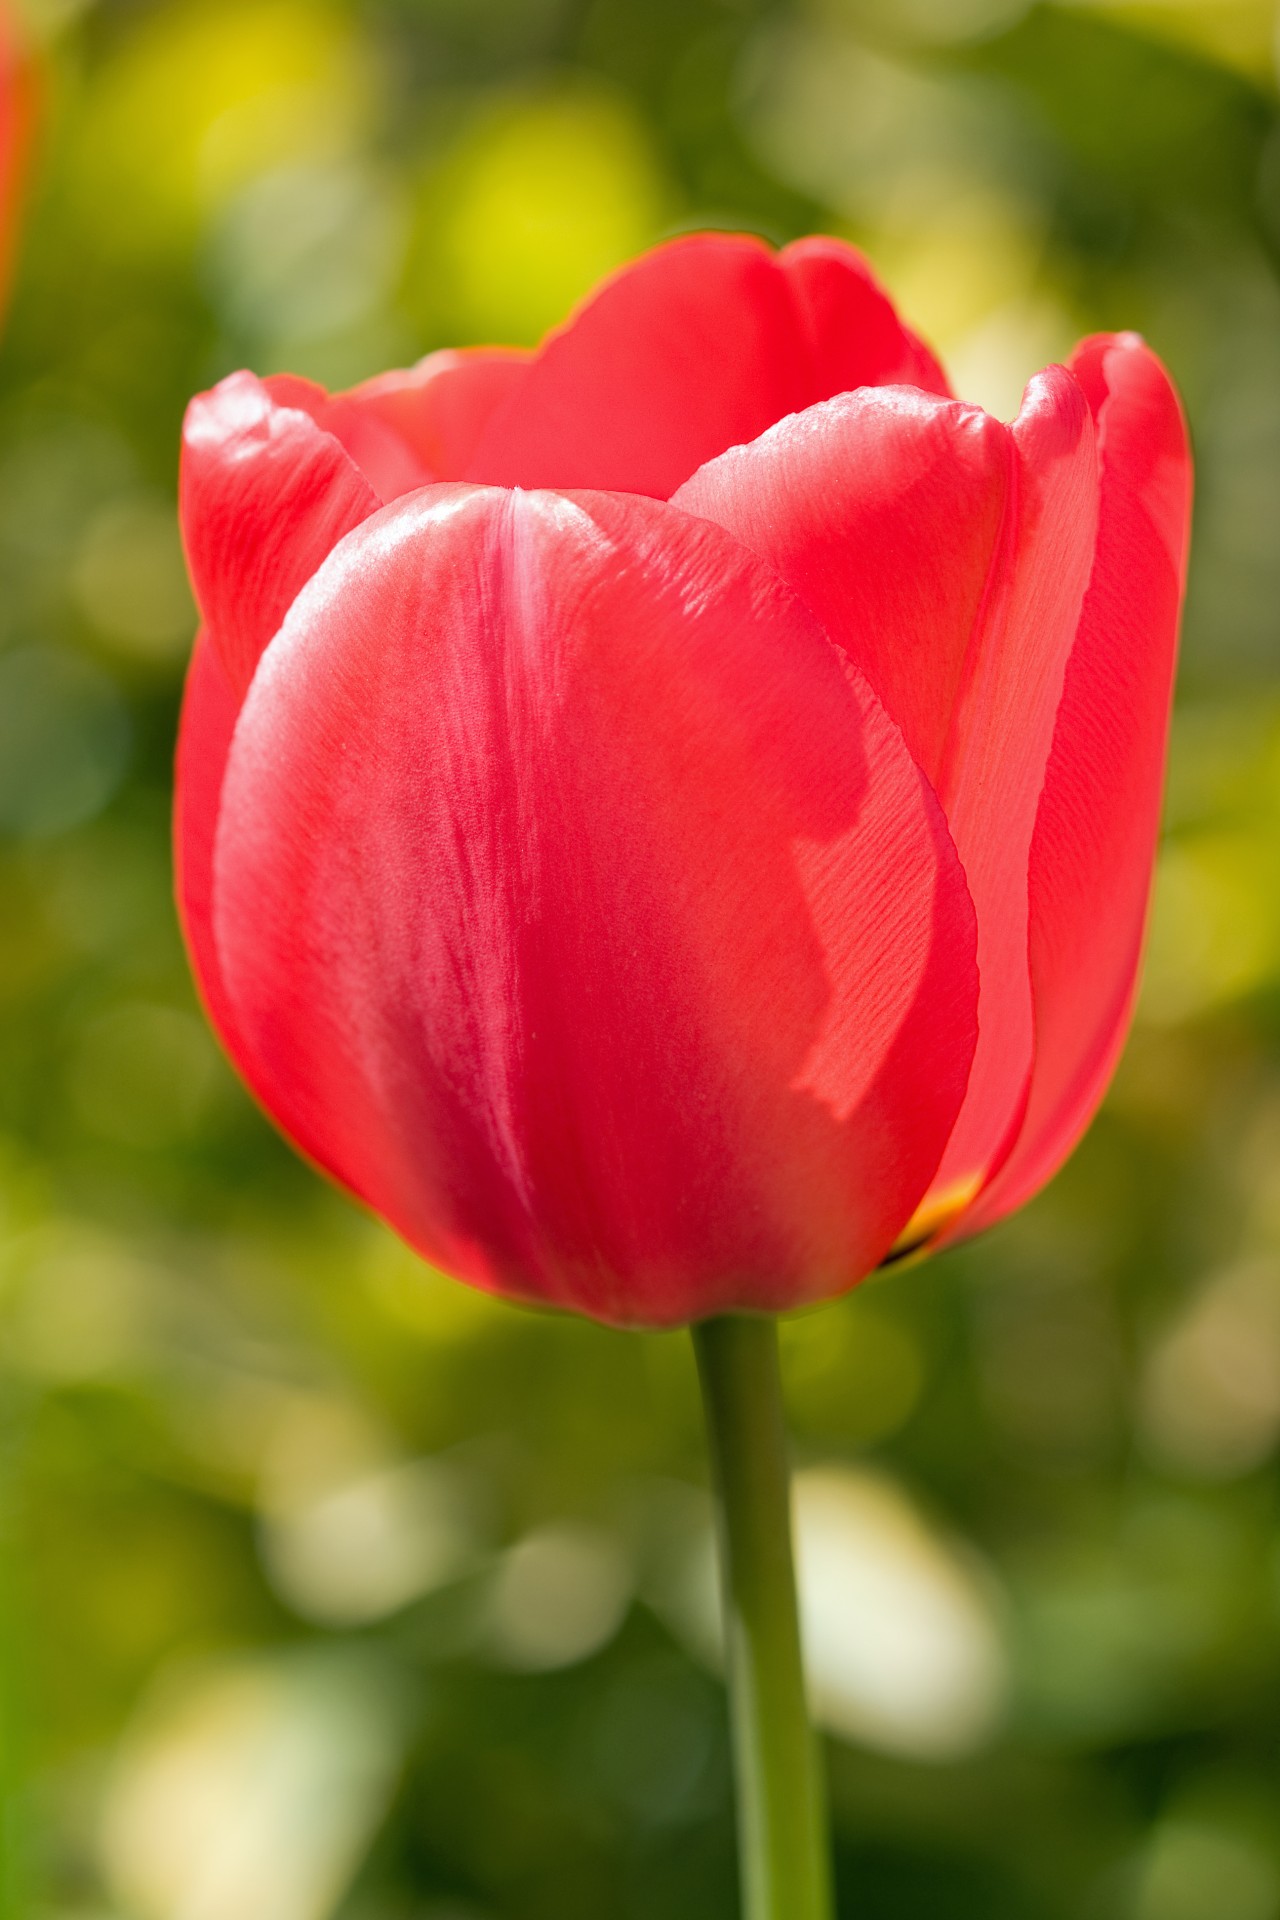 Tulip Flower Red Beautiful Macro Free Image From Needpix Com